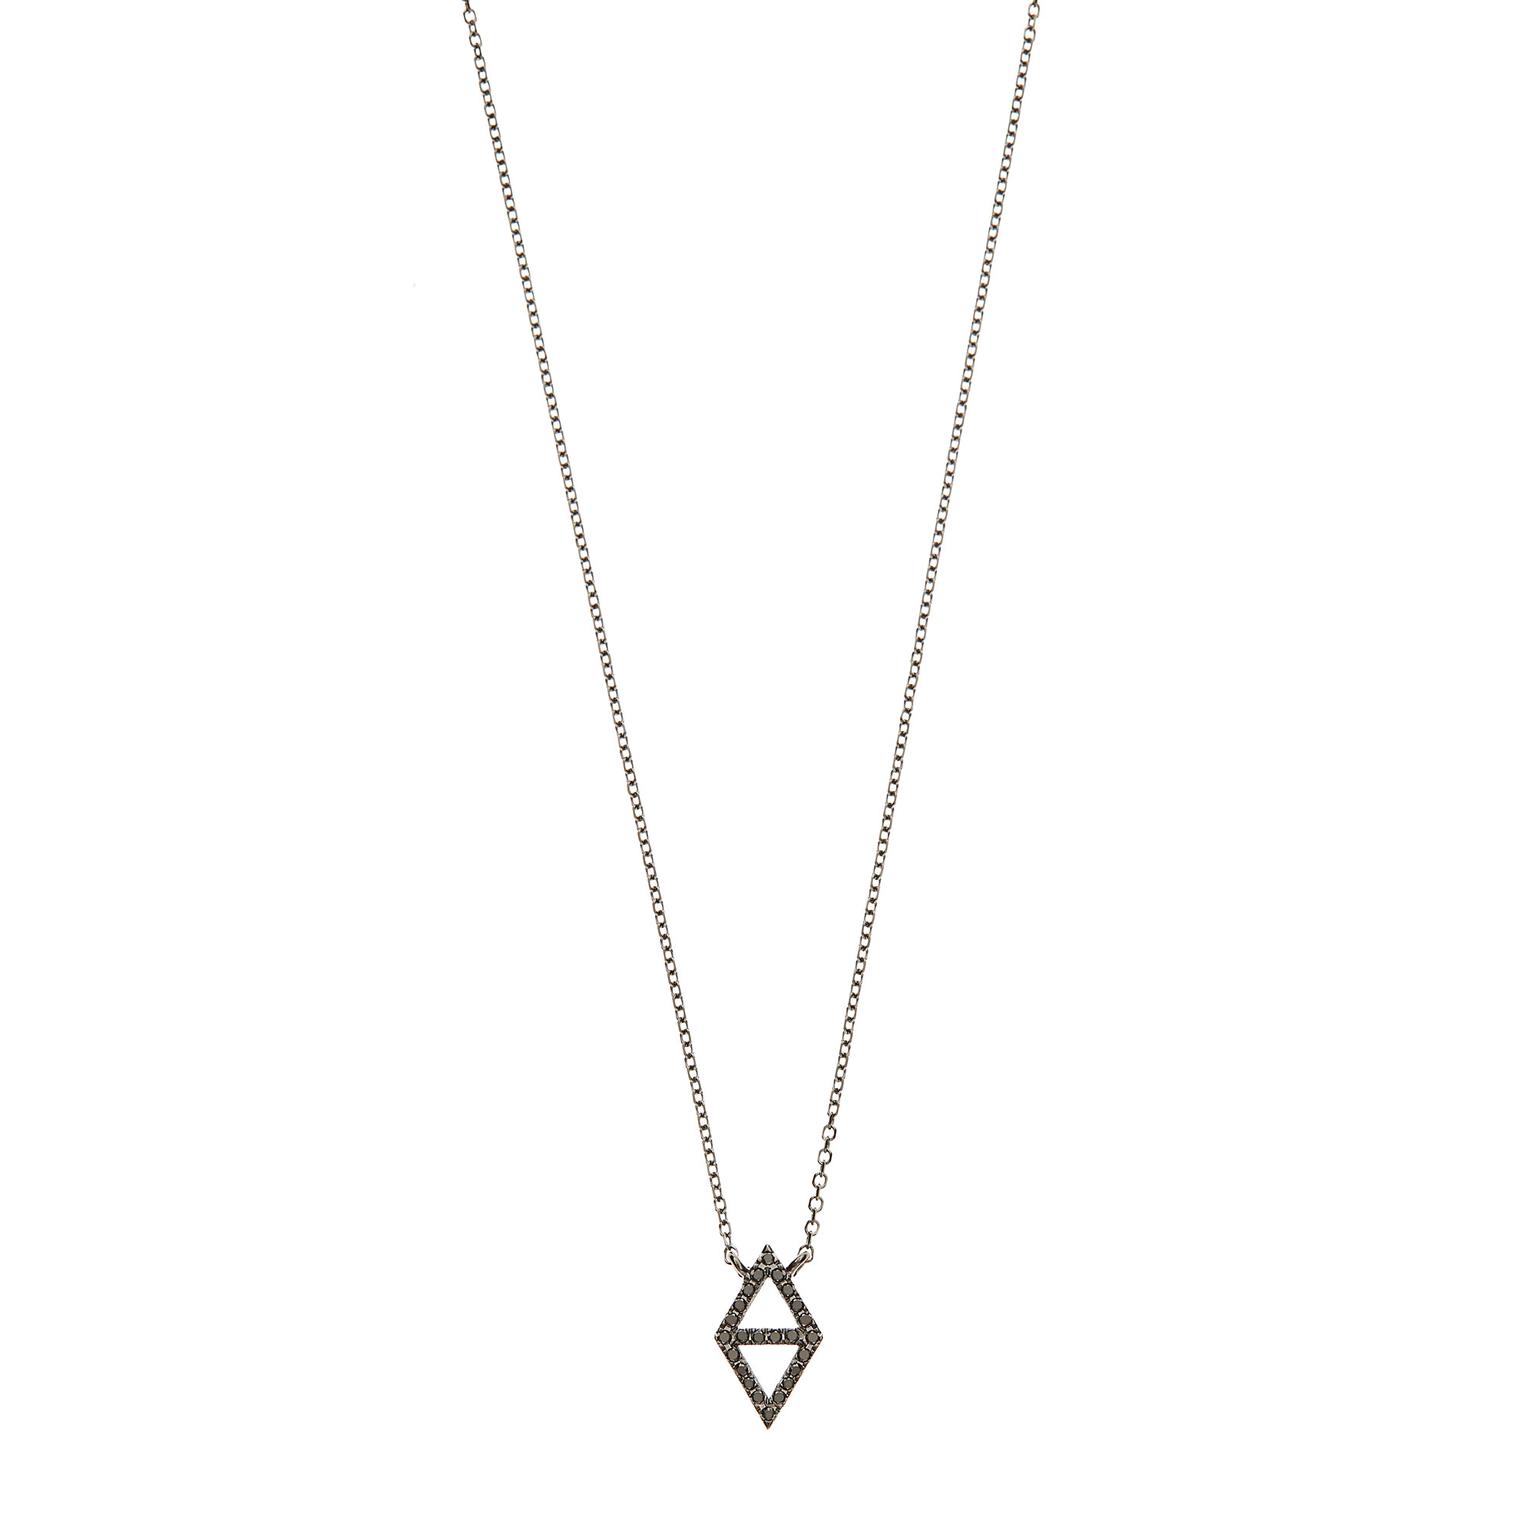 Lito Izel blackened gold pendant with black diamonds